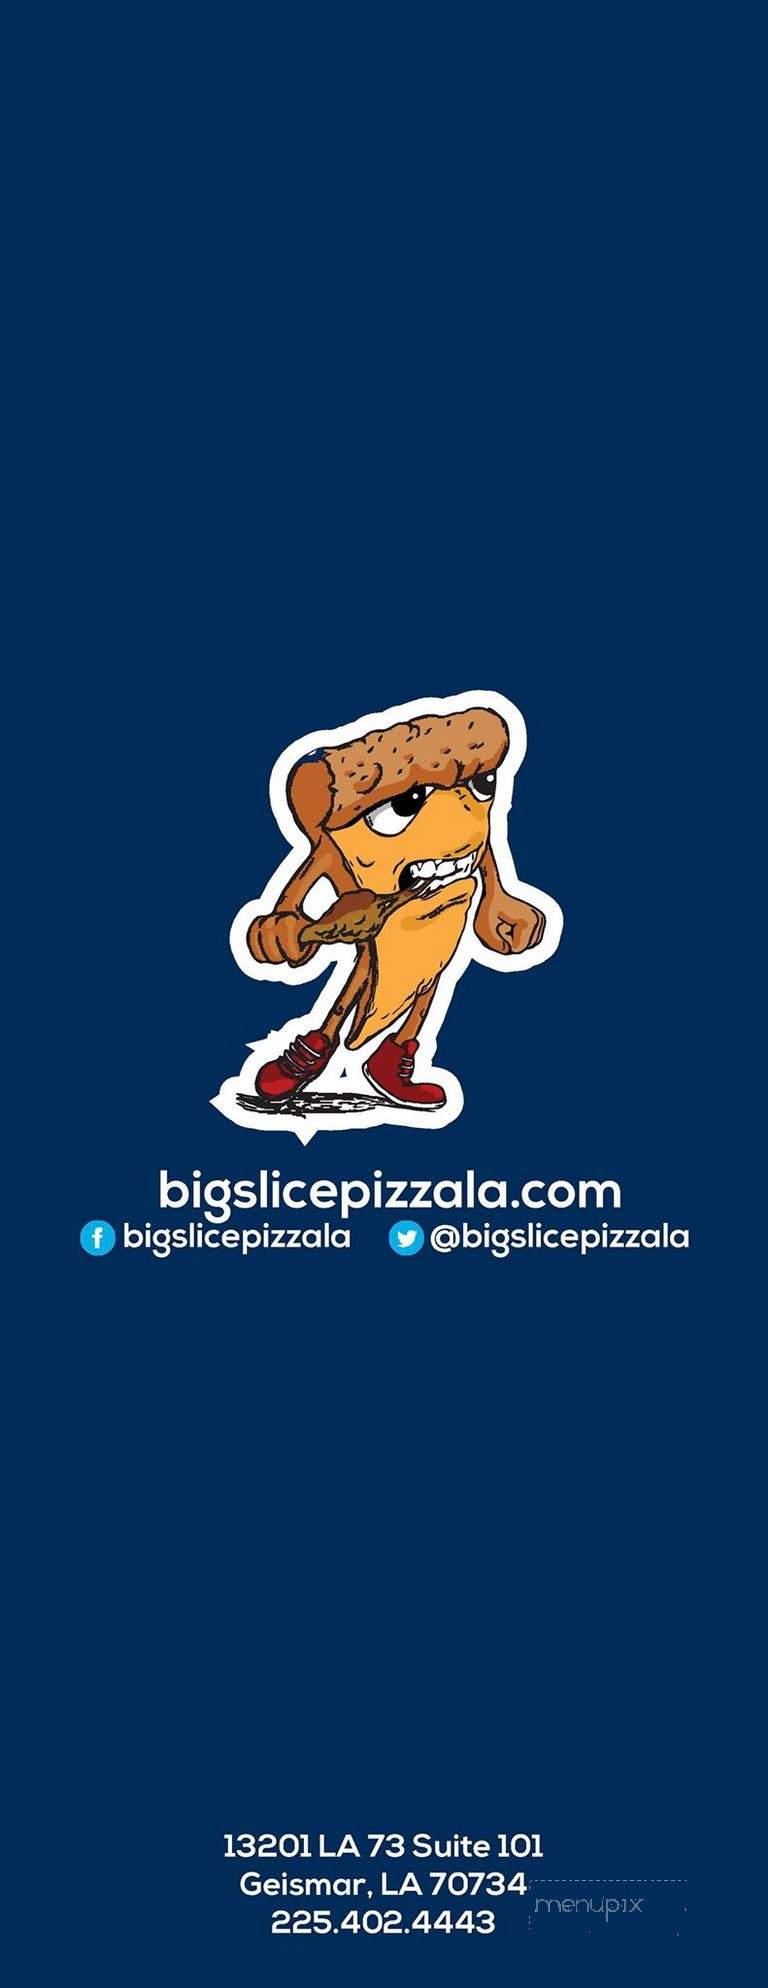 Big Slice Pizza - Geismar, LA